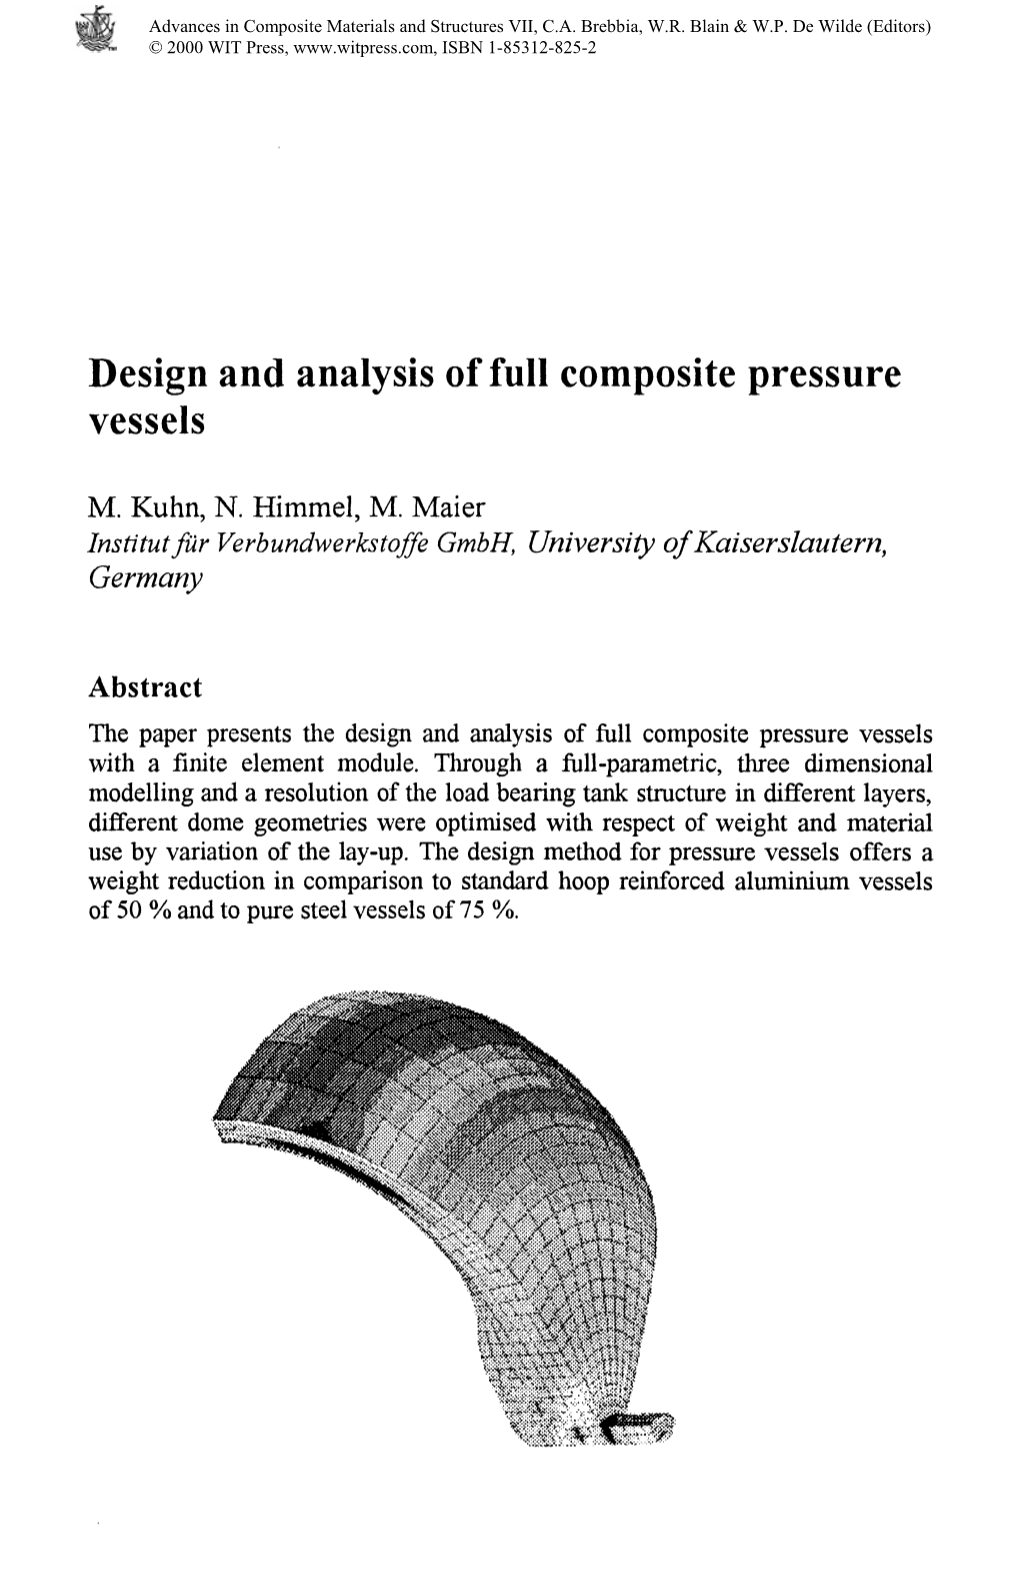 Design and Analysis of Full Composite Pressure Vessels M. Kuhn, N. Himmel, M. Maier Institutfur Verbundwerkstoffe Gmbh, Universi